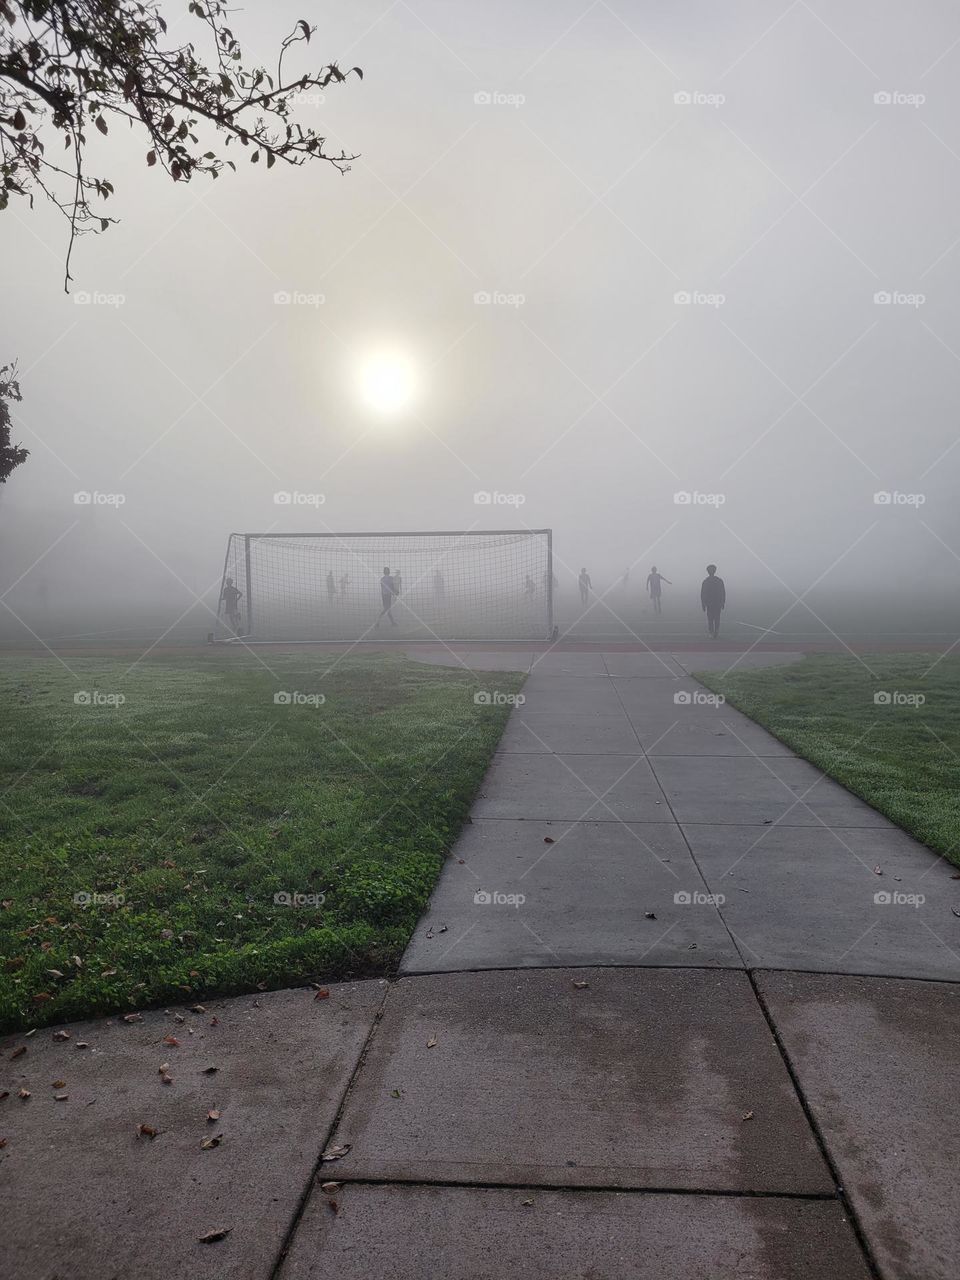 soccer in the fog